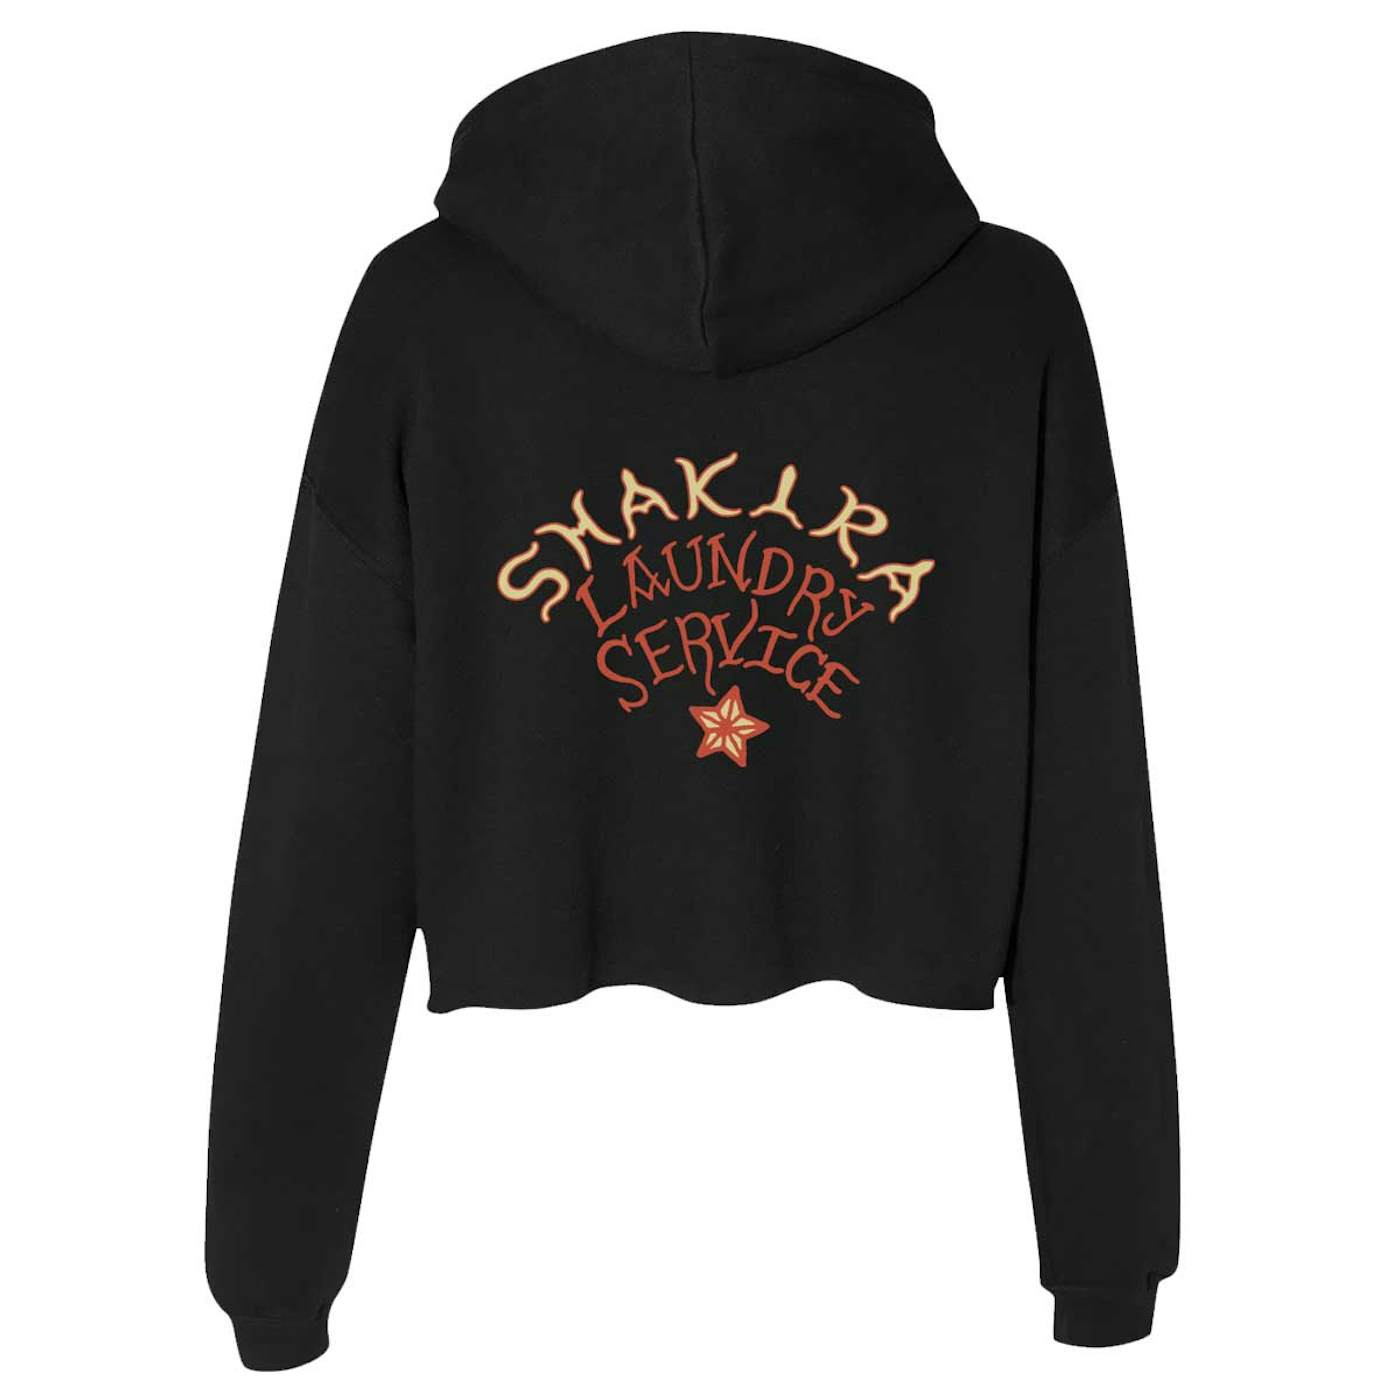 Shakira Laundry Service Logo Ladies Cropped Hoodie - Black